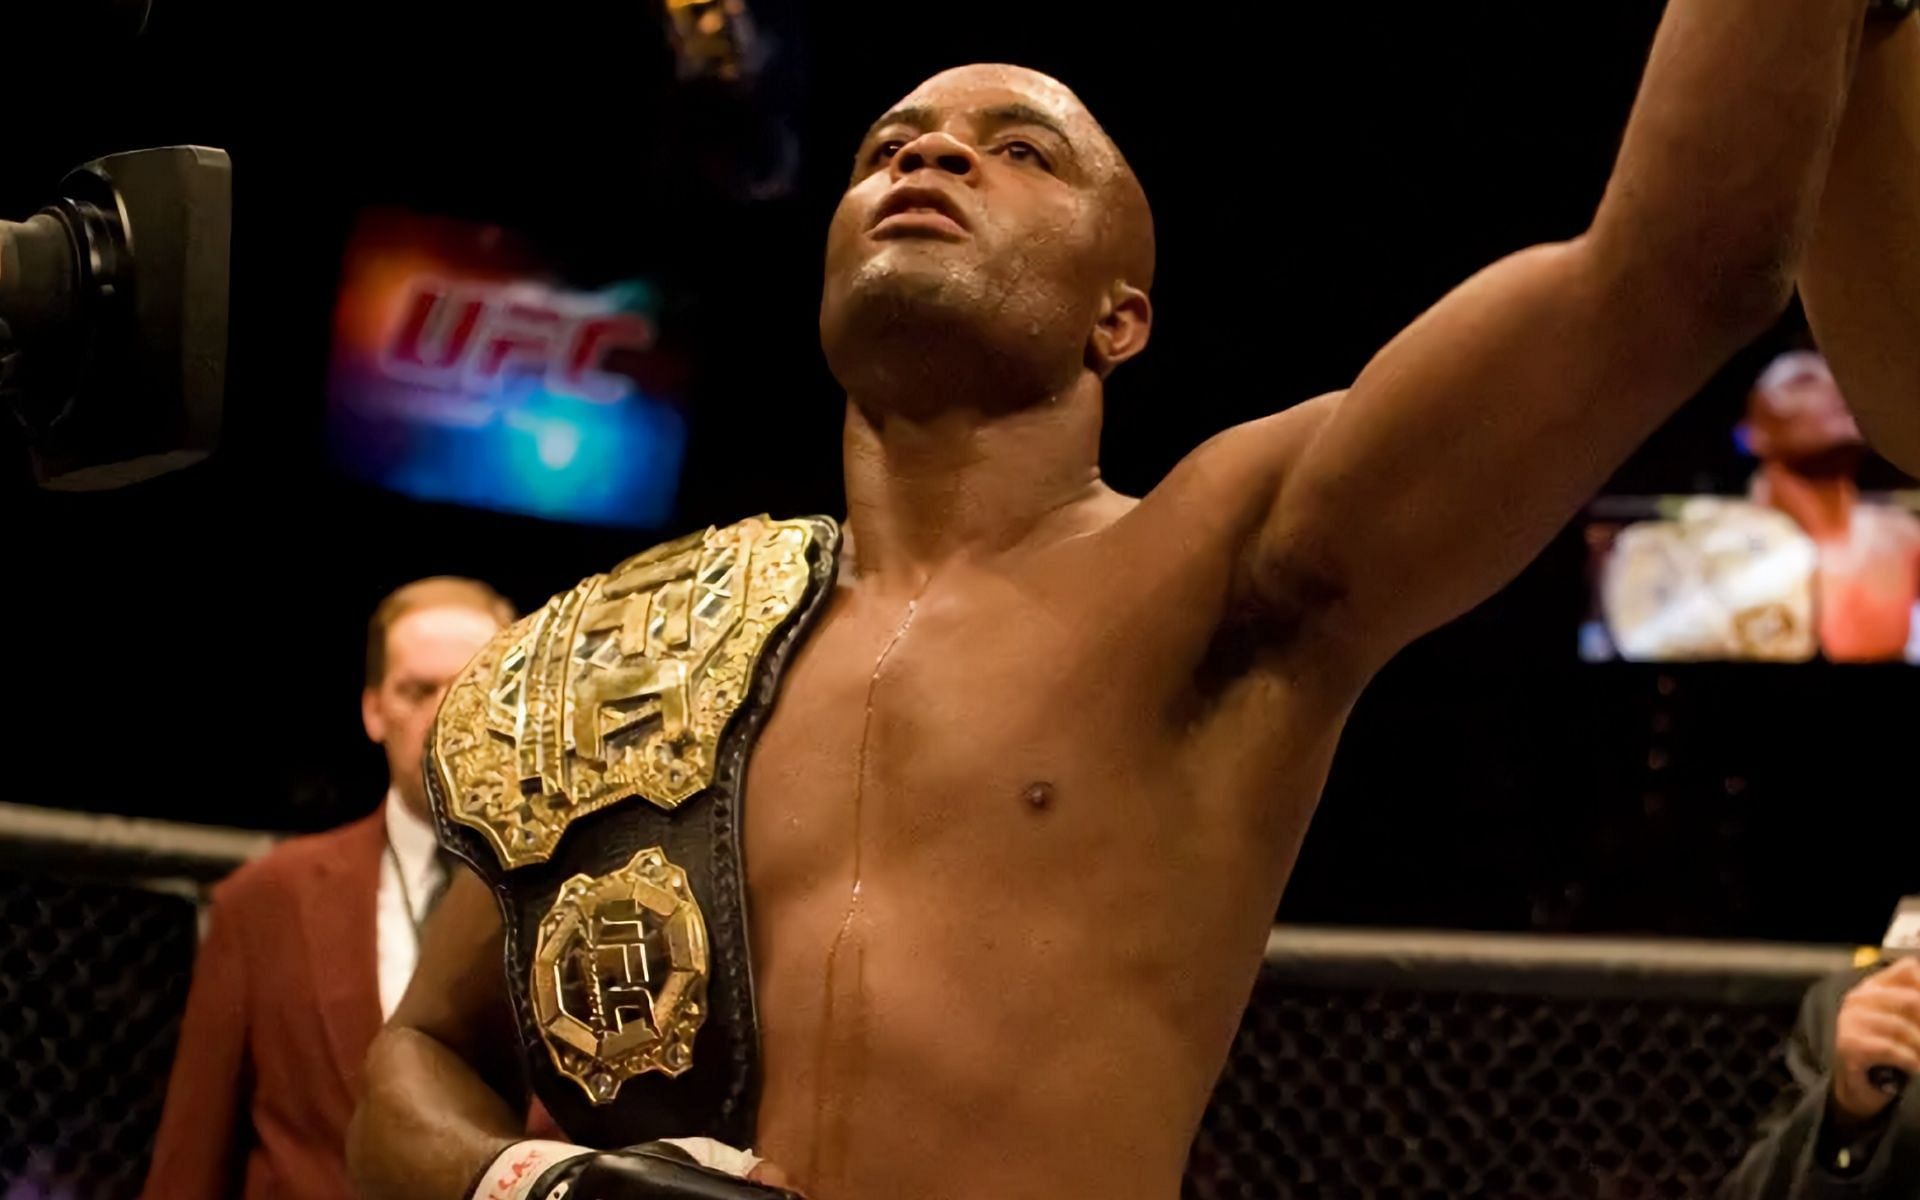 Anderson Silva (The Spider), MMA Fighter Page